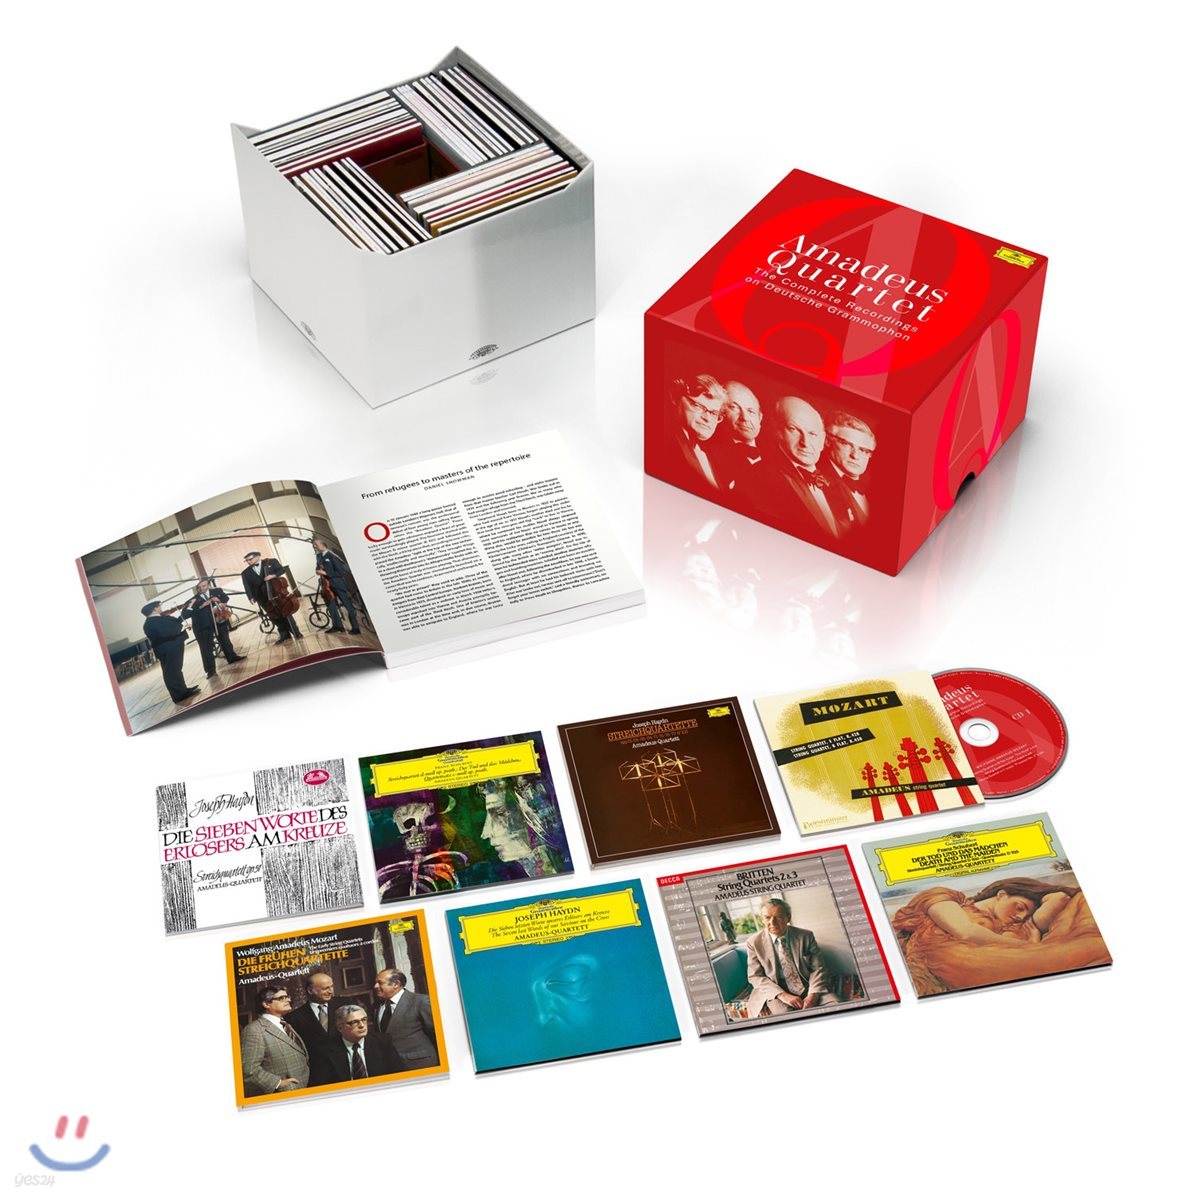 Amadeus Quartett 아마데우스 사중주단 - DG, 데카, 웨스트민스터 녹음 전집 (The Complete Recordings on Deutsche Grammophon, Decca, Westminster)